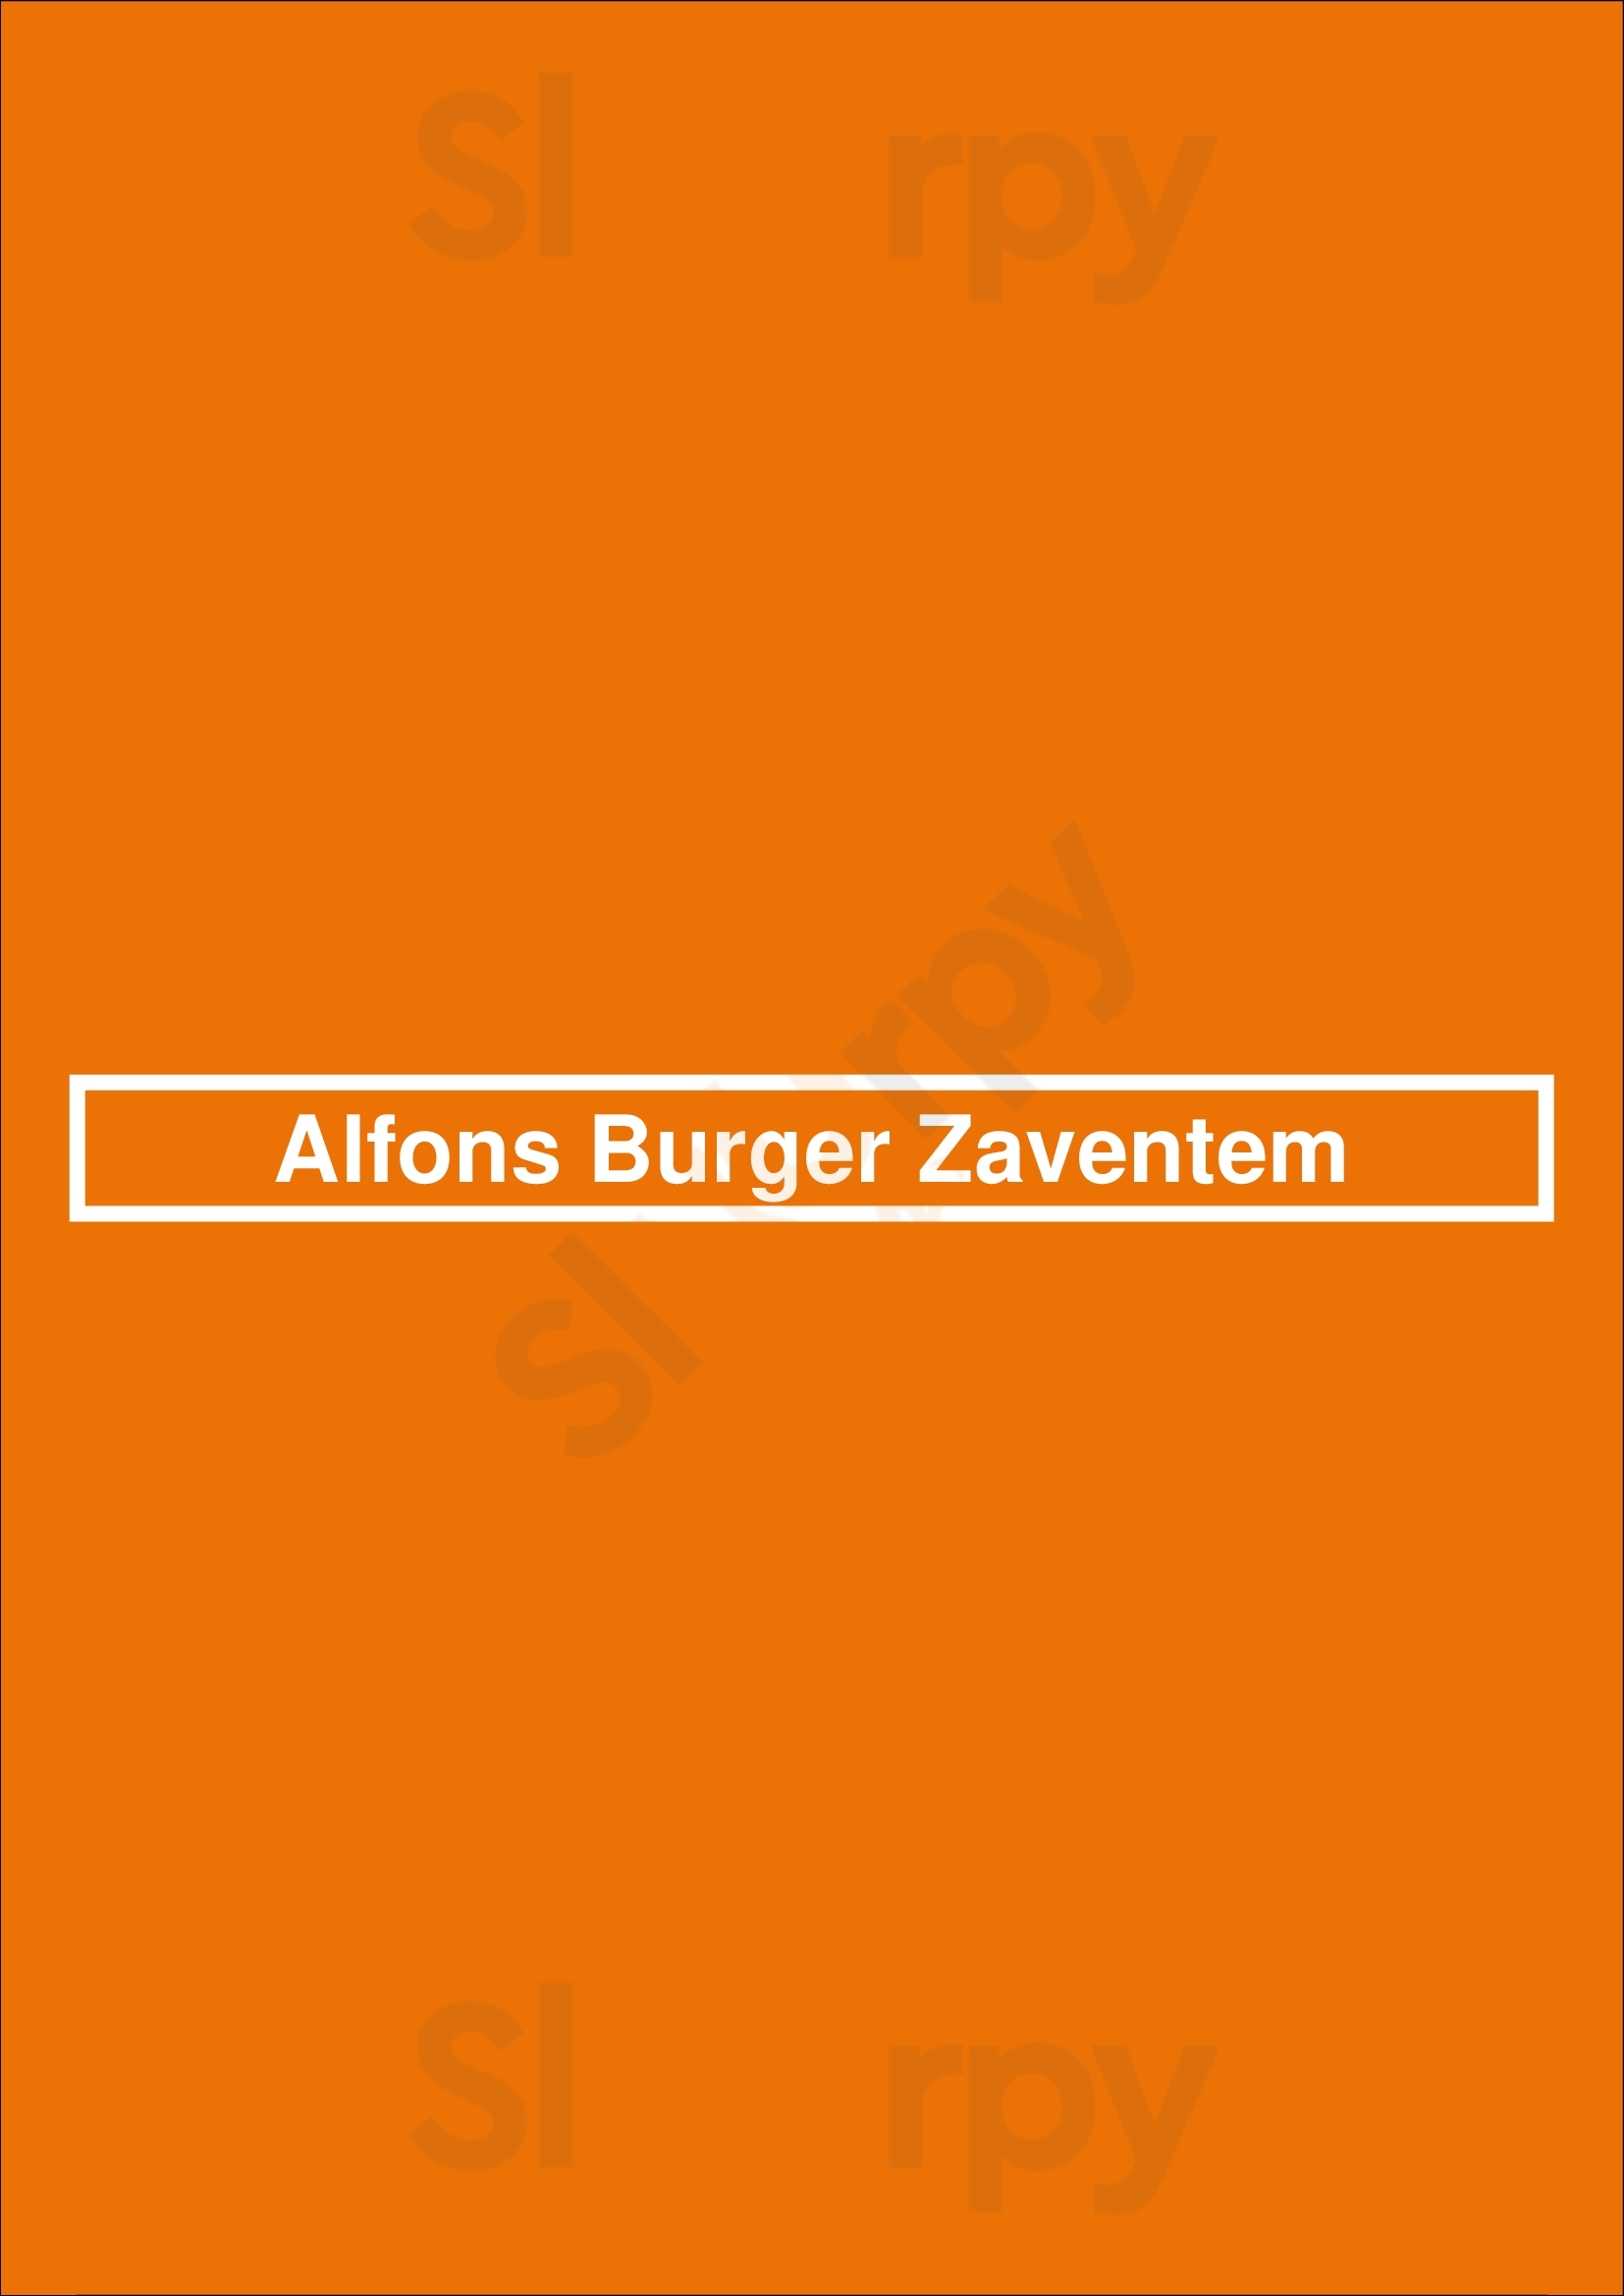 Alfons Burger Zaventem Zaventem Menu - 1